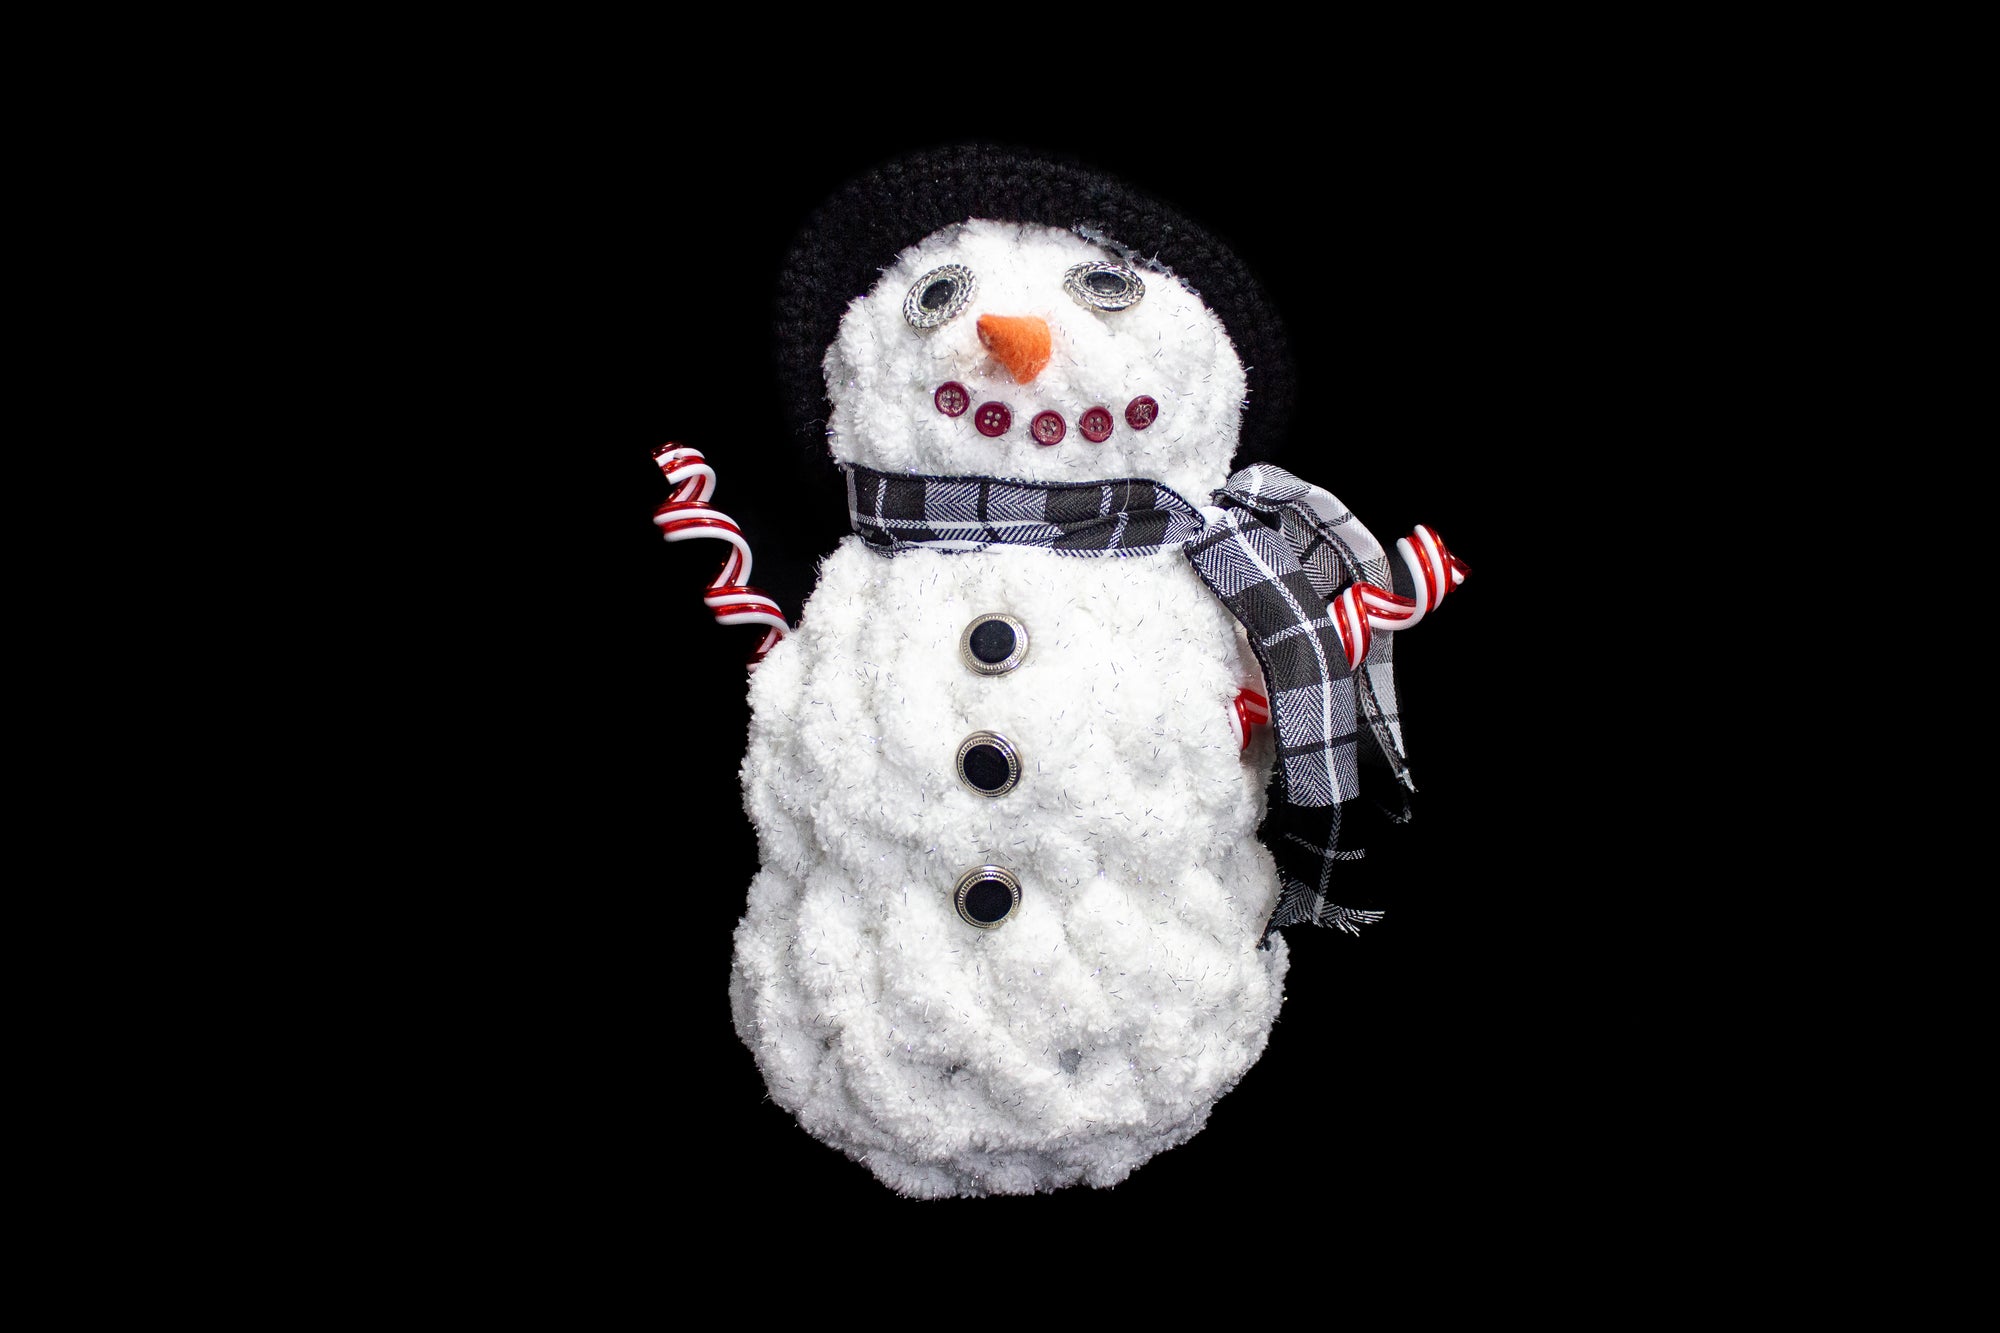 Crocheted Snowman